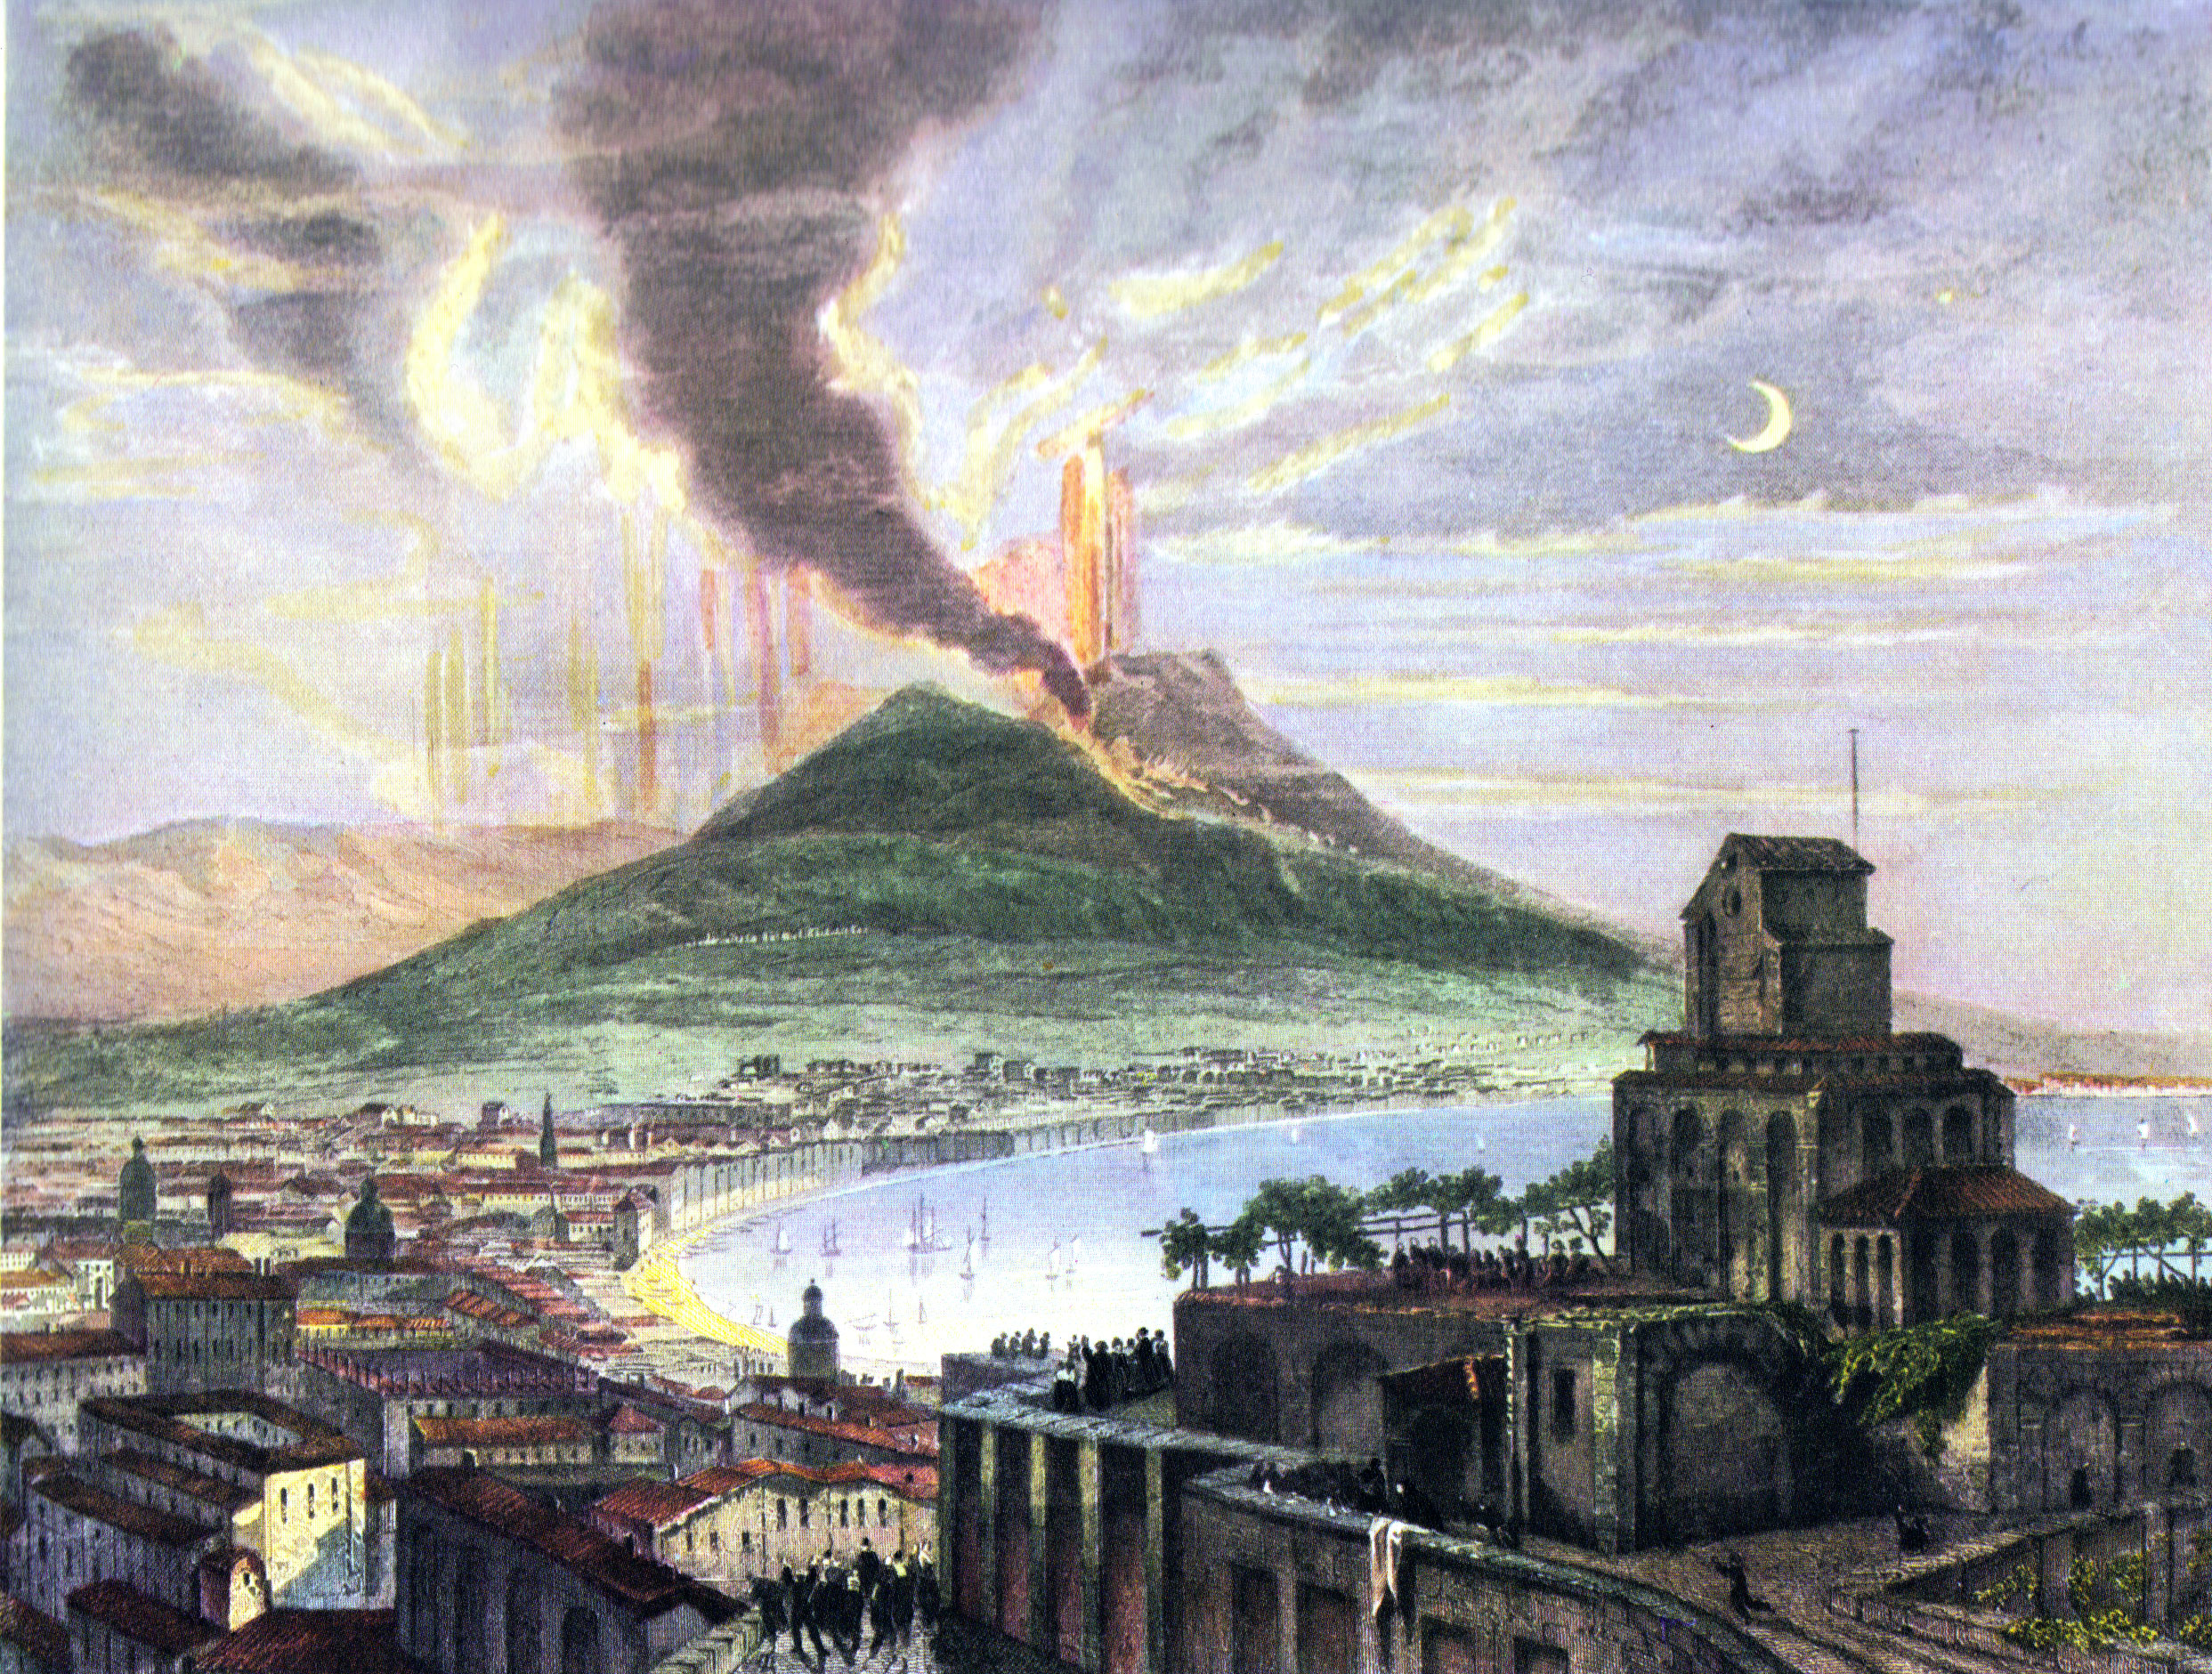 Napoli Mount Vesuvius 1858 engraving